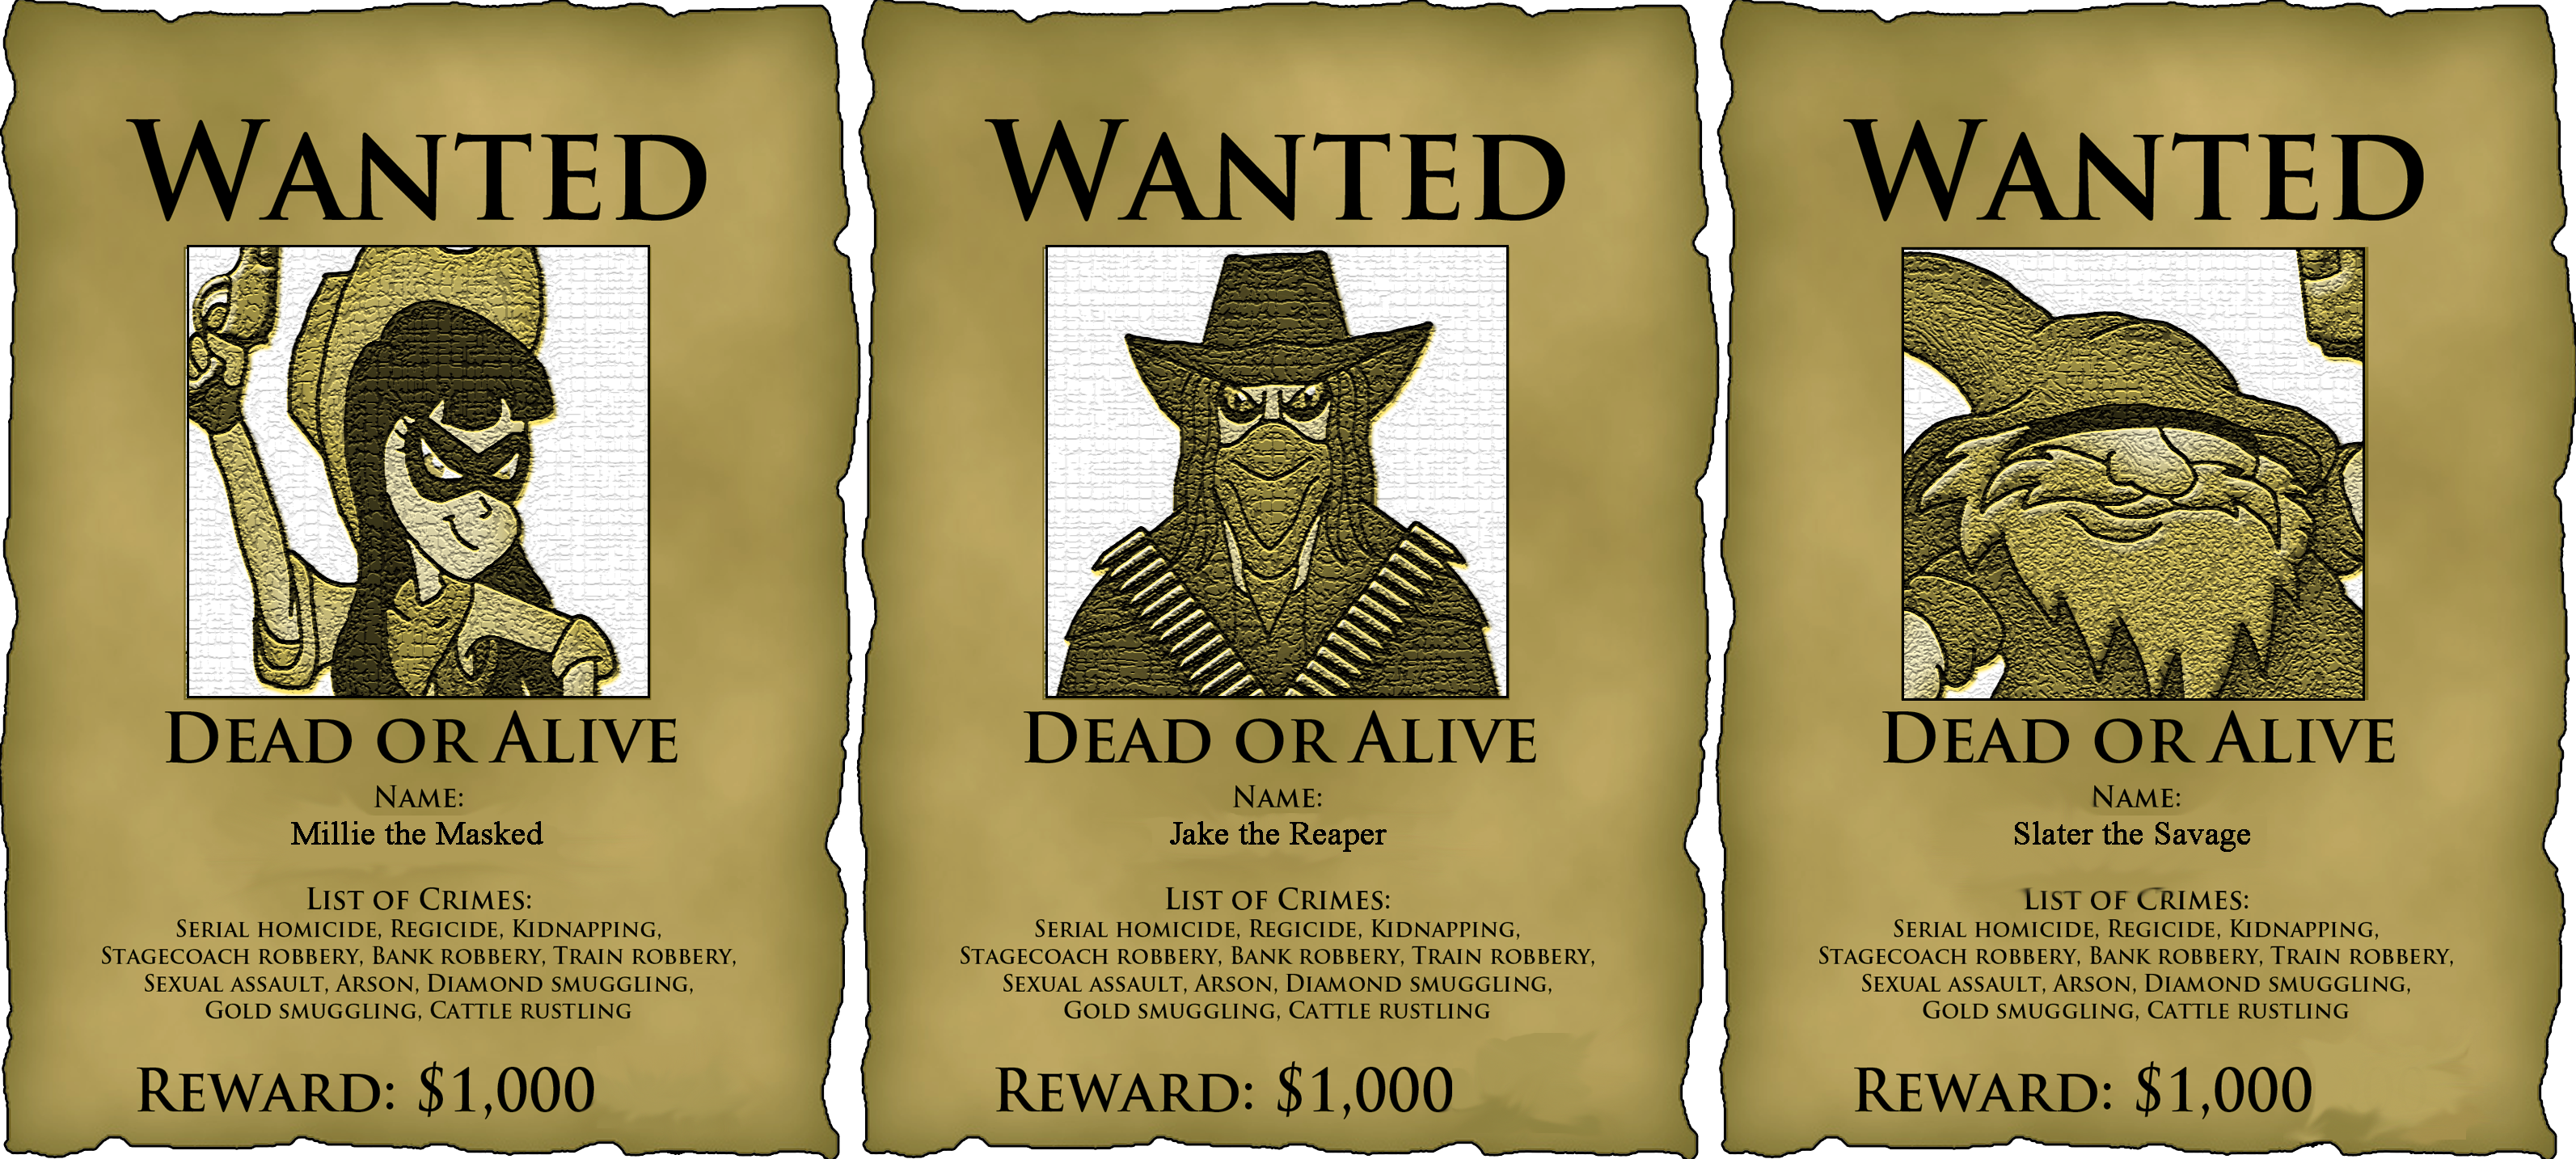 Island wanted. Wanted плакат. Плакат розыска. Плакат разыскивается дикий Запад. Wanted картинка.